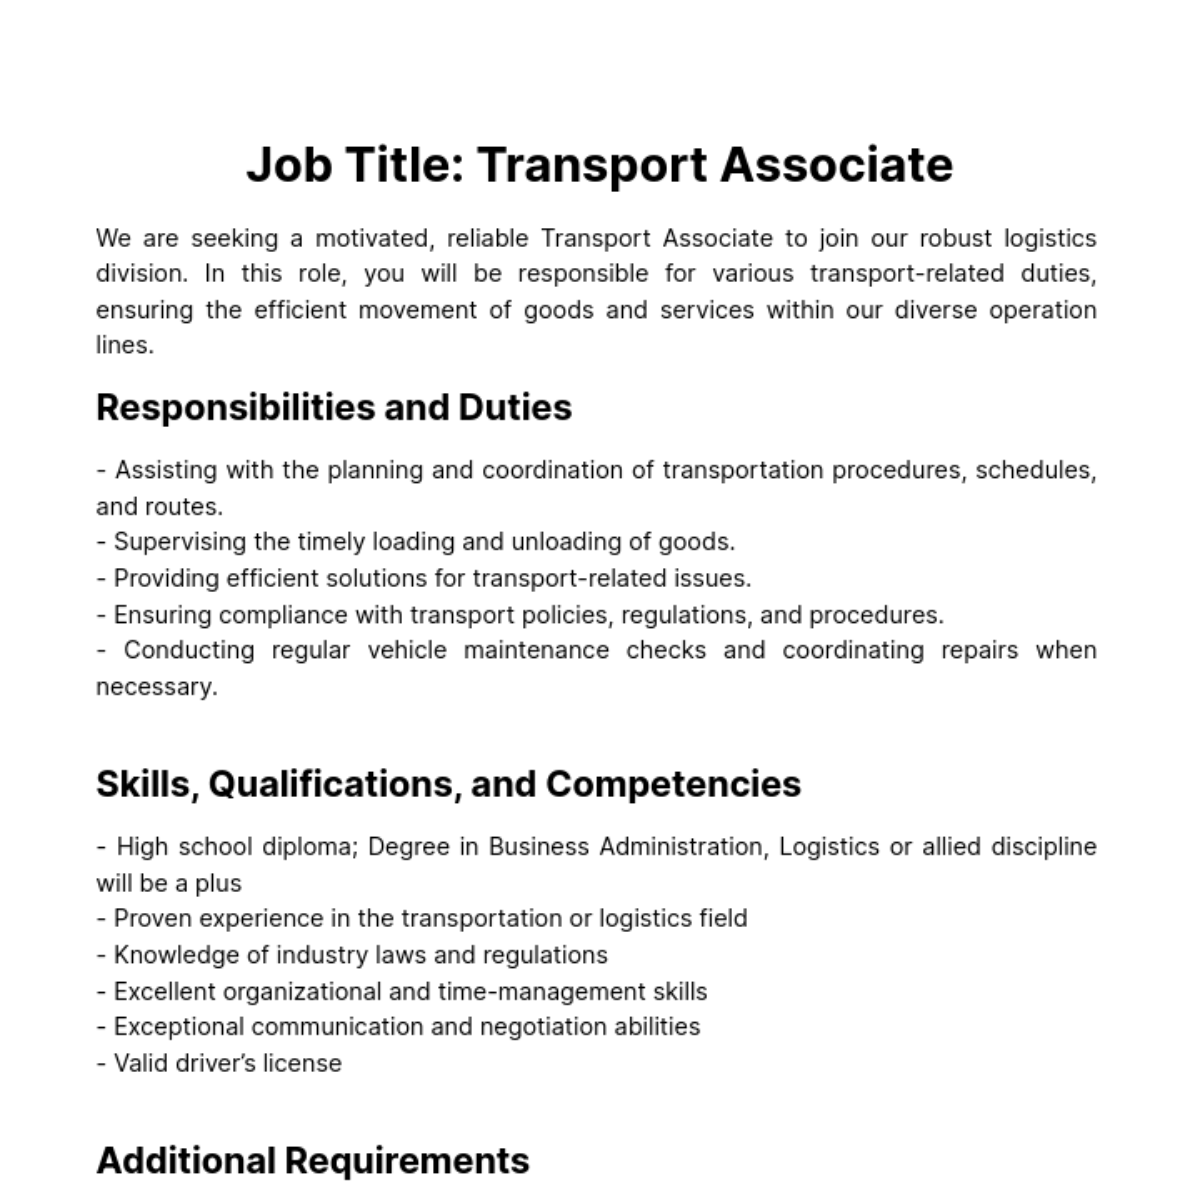 Transport Associate Job Description Template